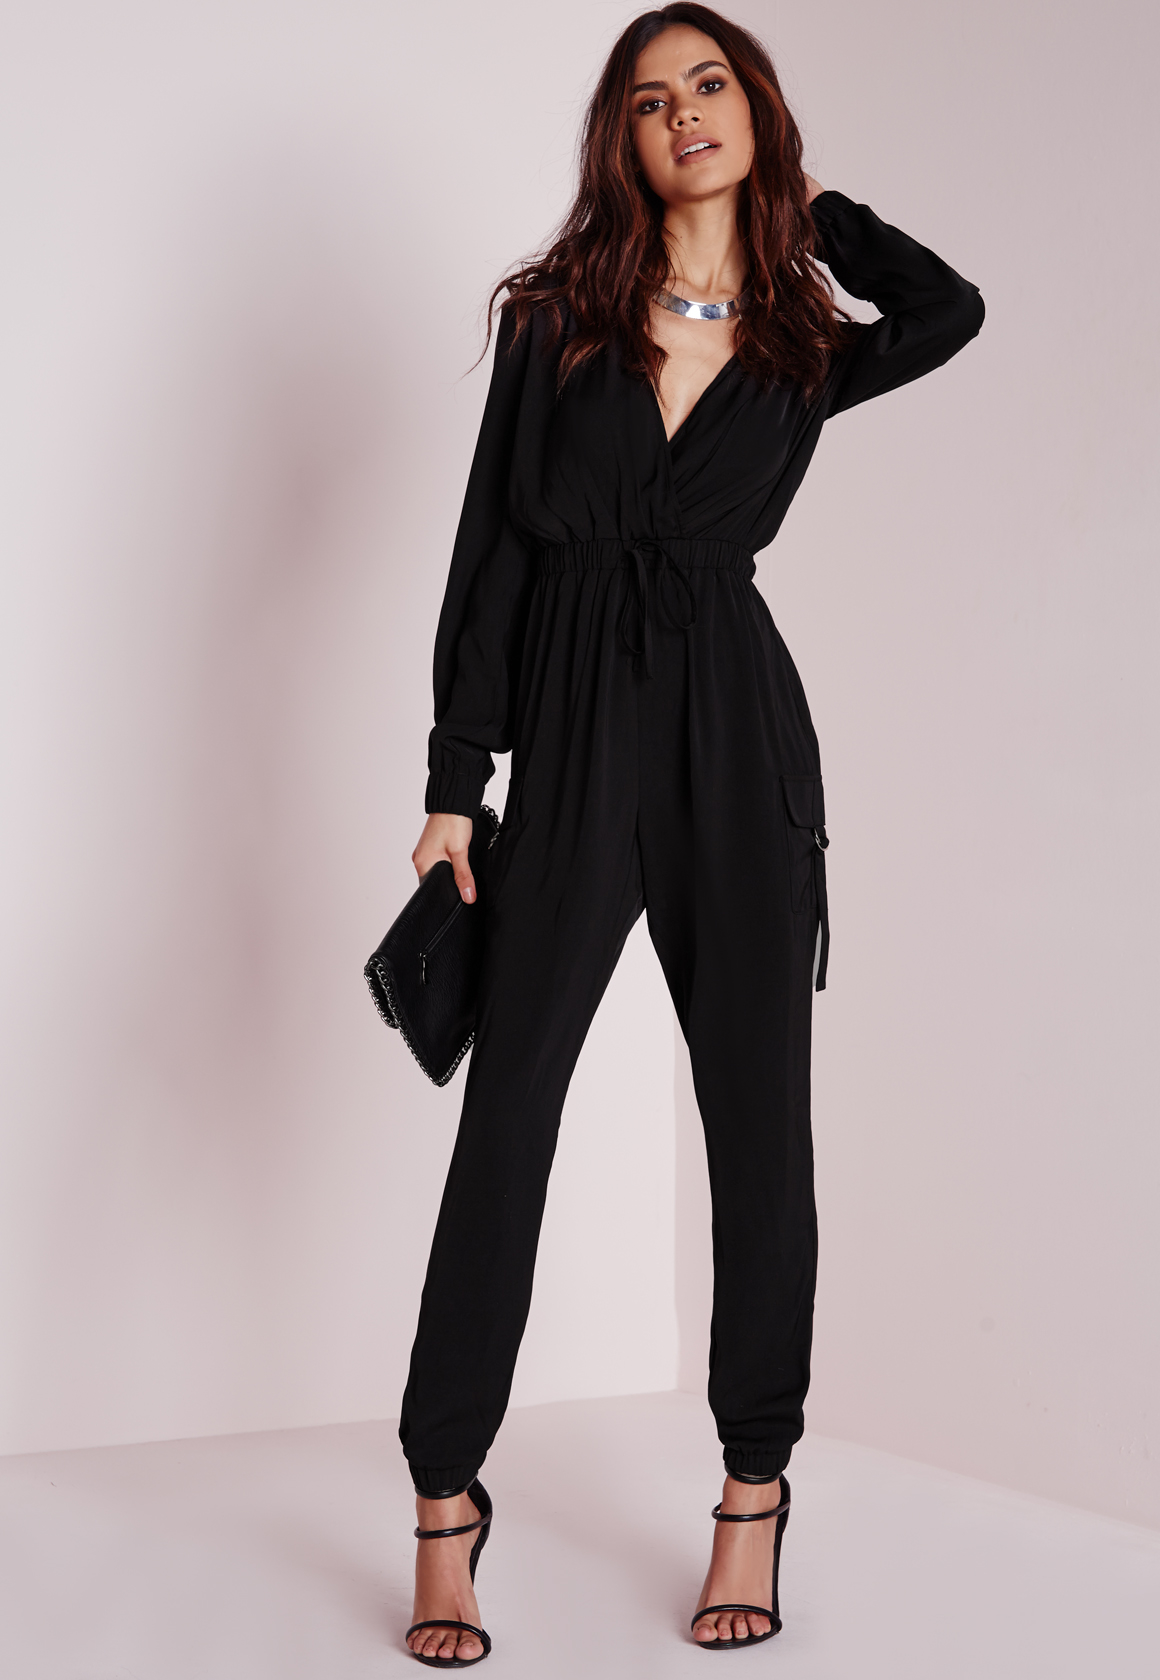 Lyst - Missguided Long Sleeve Pocket Detail Jumpsuit Black in Black